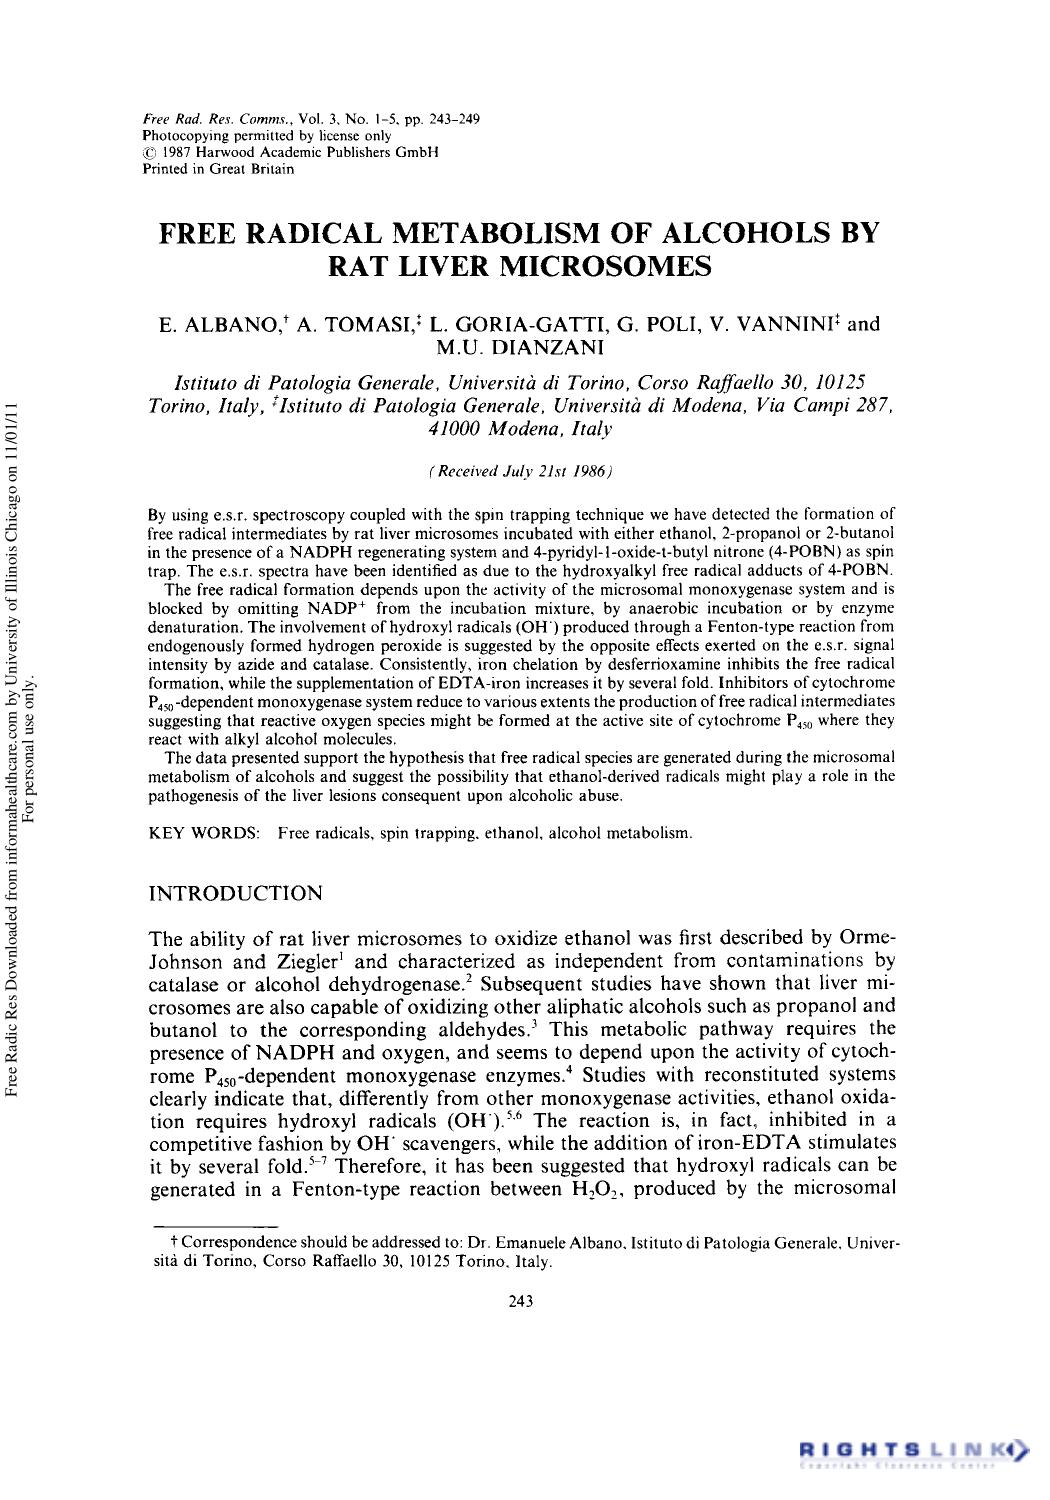 Free Radical Metabolism of Alcohols by Rat Liver Microsomes by E. Albano1† A. Tomasi1 2 L. Goria-Gatti1 G. Poli1 V. Vannini1 2 & M. U. Dianzani1